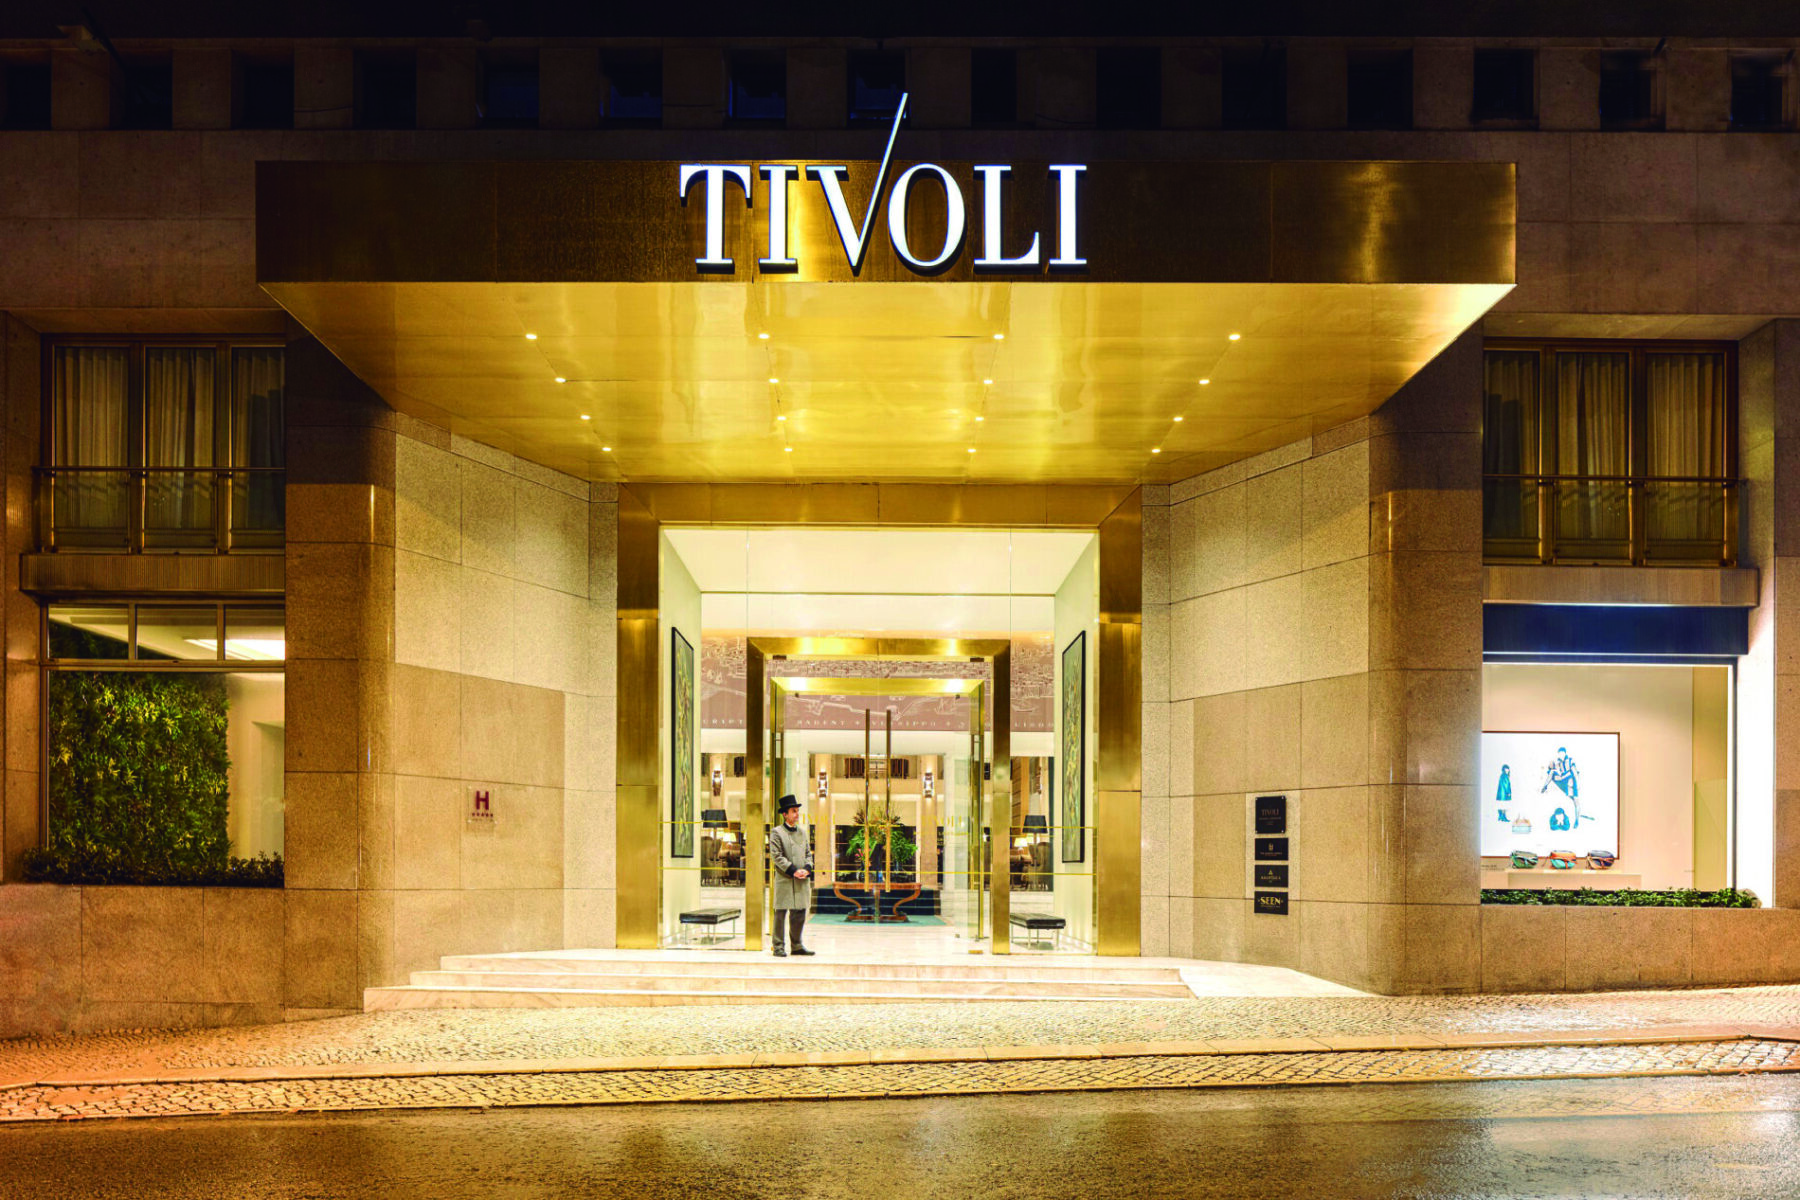 Hotels in Sao Paulo  Tivoli Hotels & Resorts in Sao Paulo